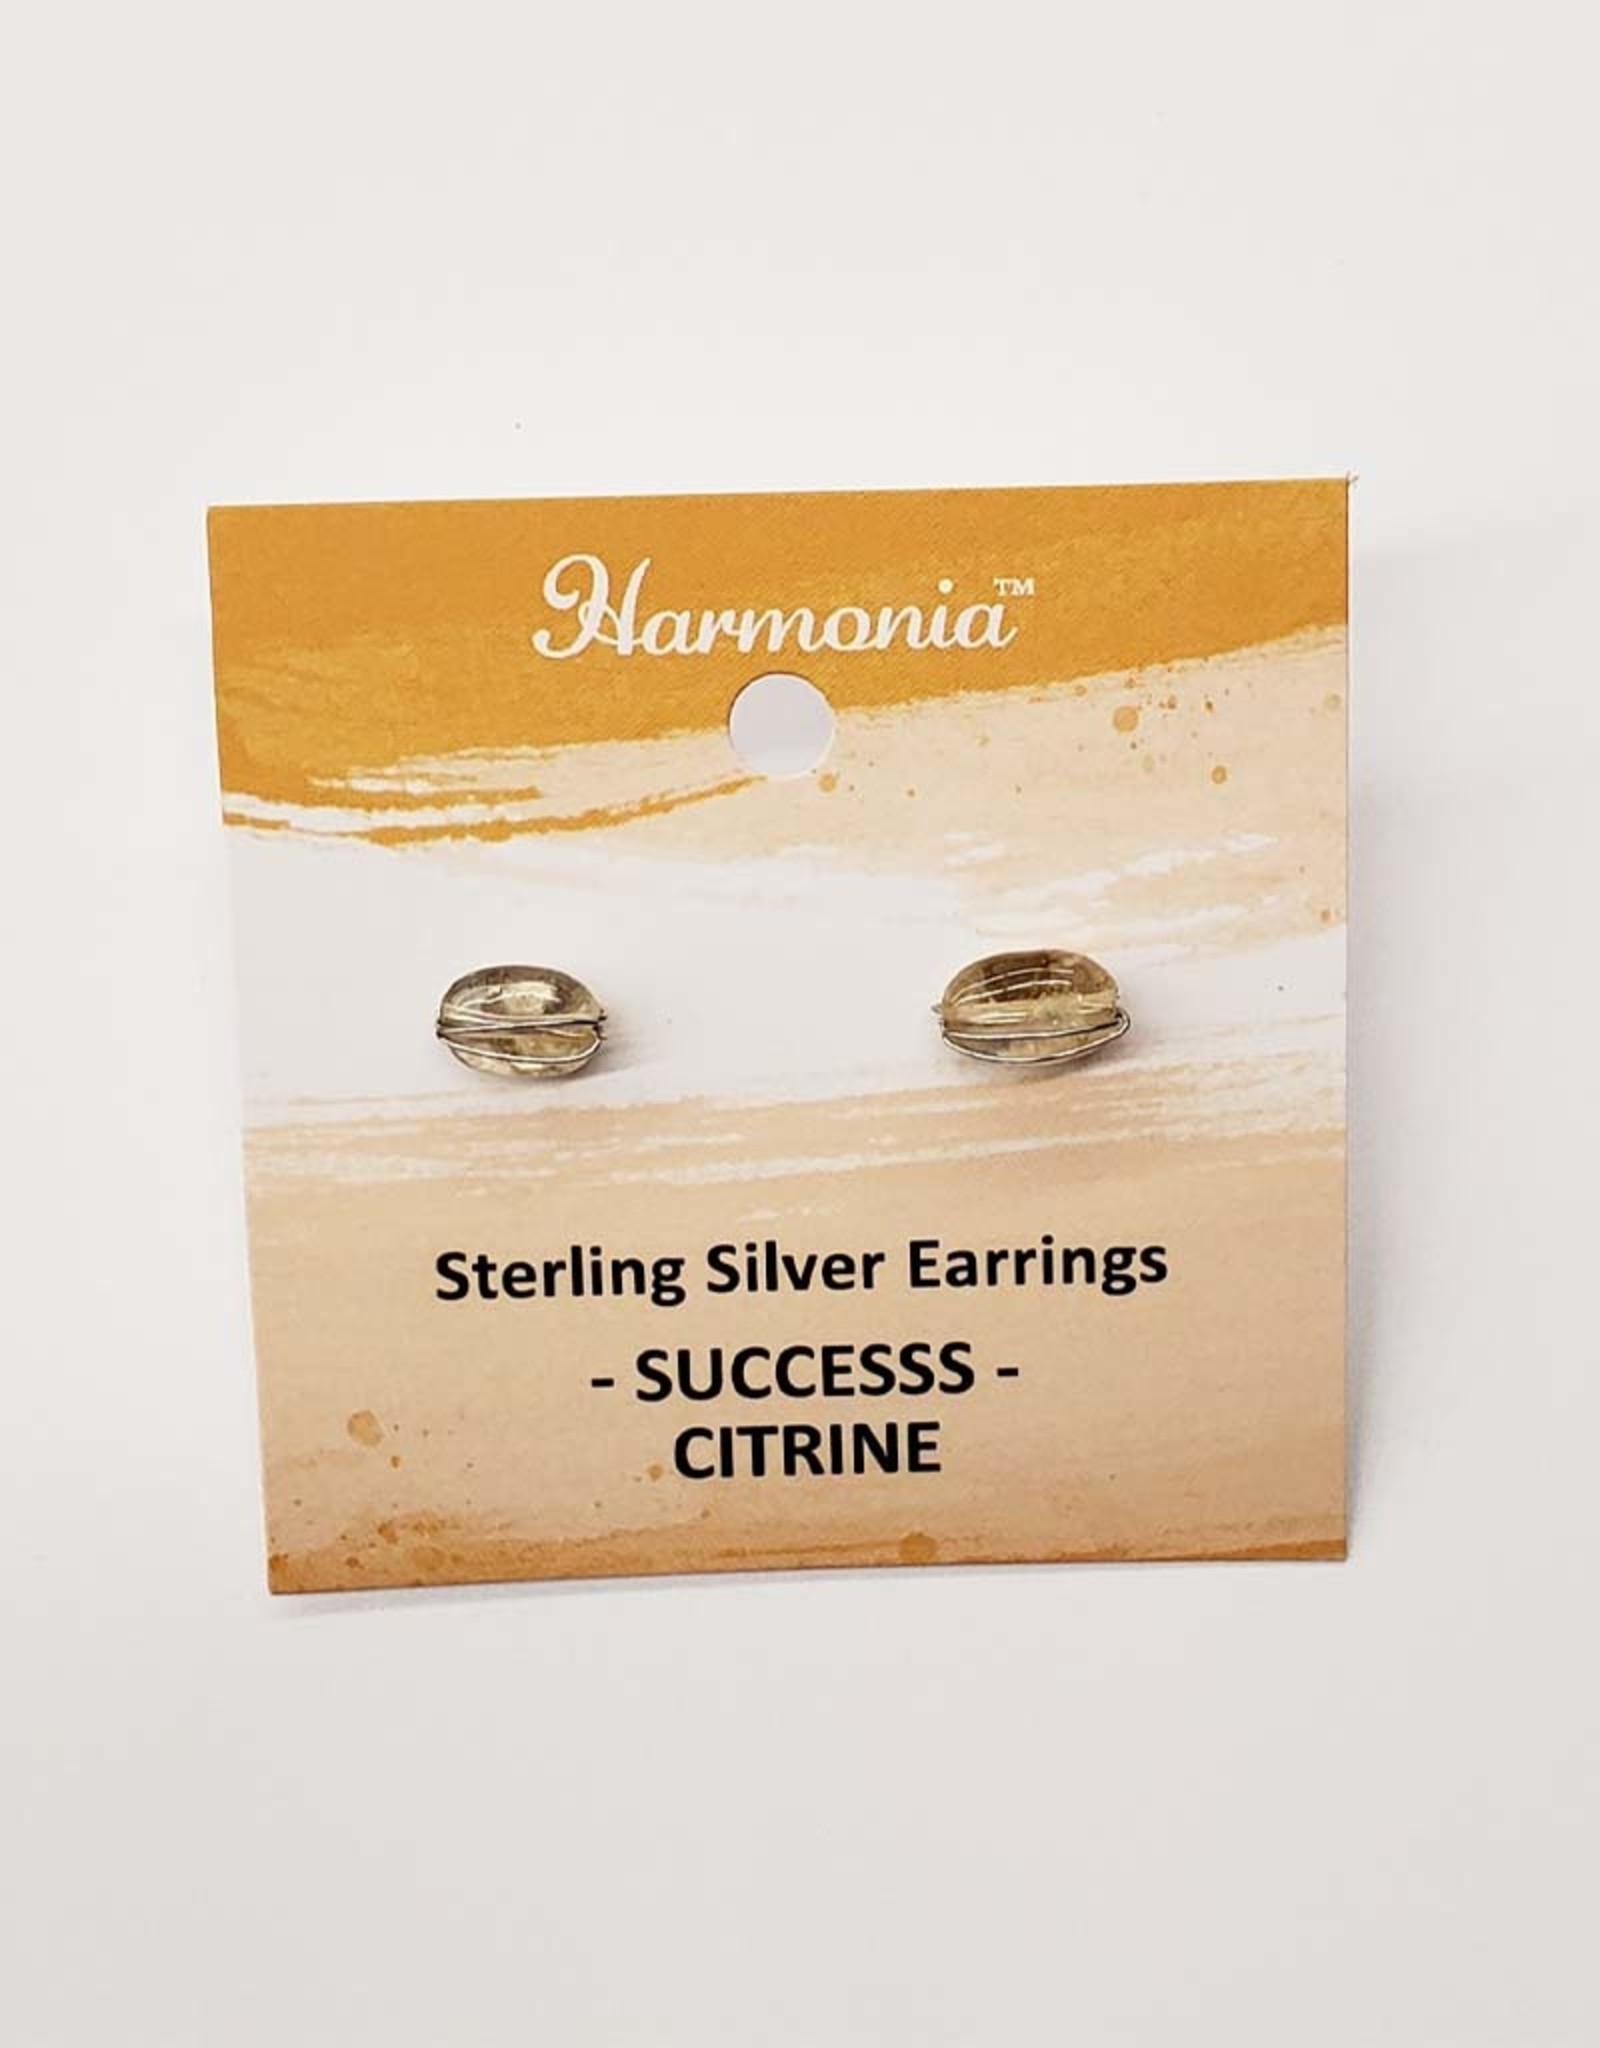 Harmonia Citrine Sterling Silver Earrings